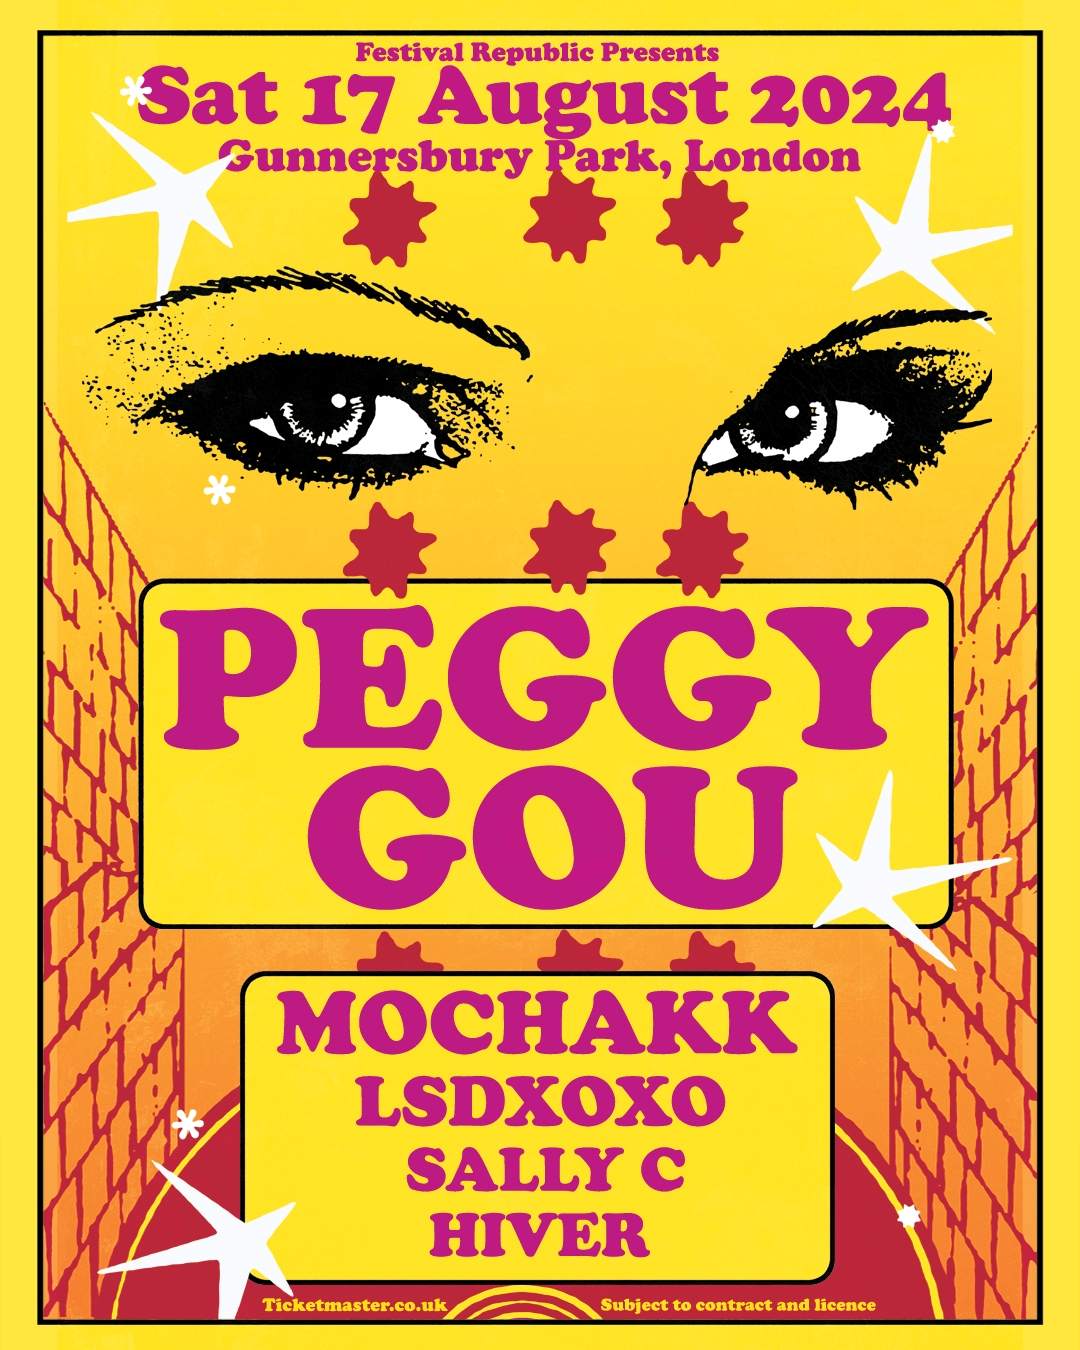 Peggy Gou plus special guests Mochakk, LSDXOXO, Sally C + Hiver - フライヤー表